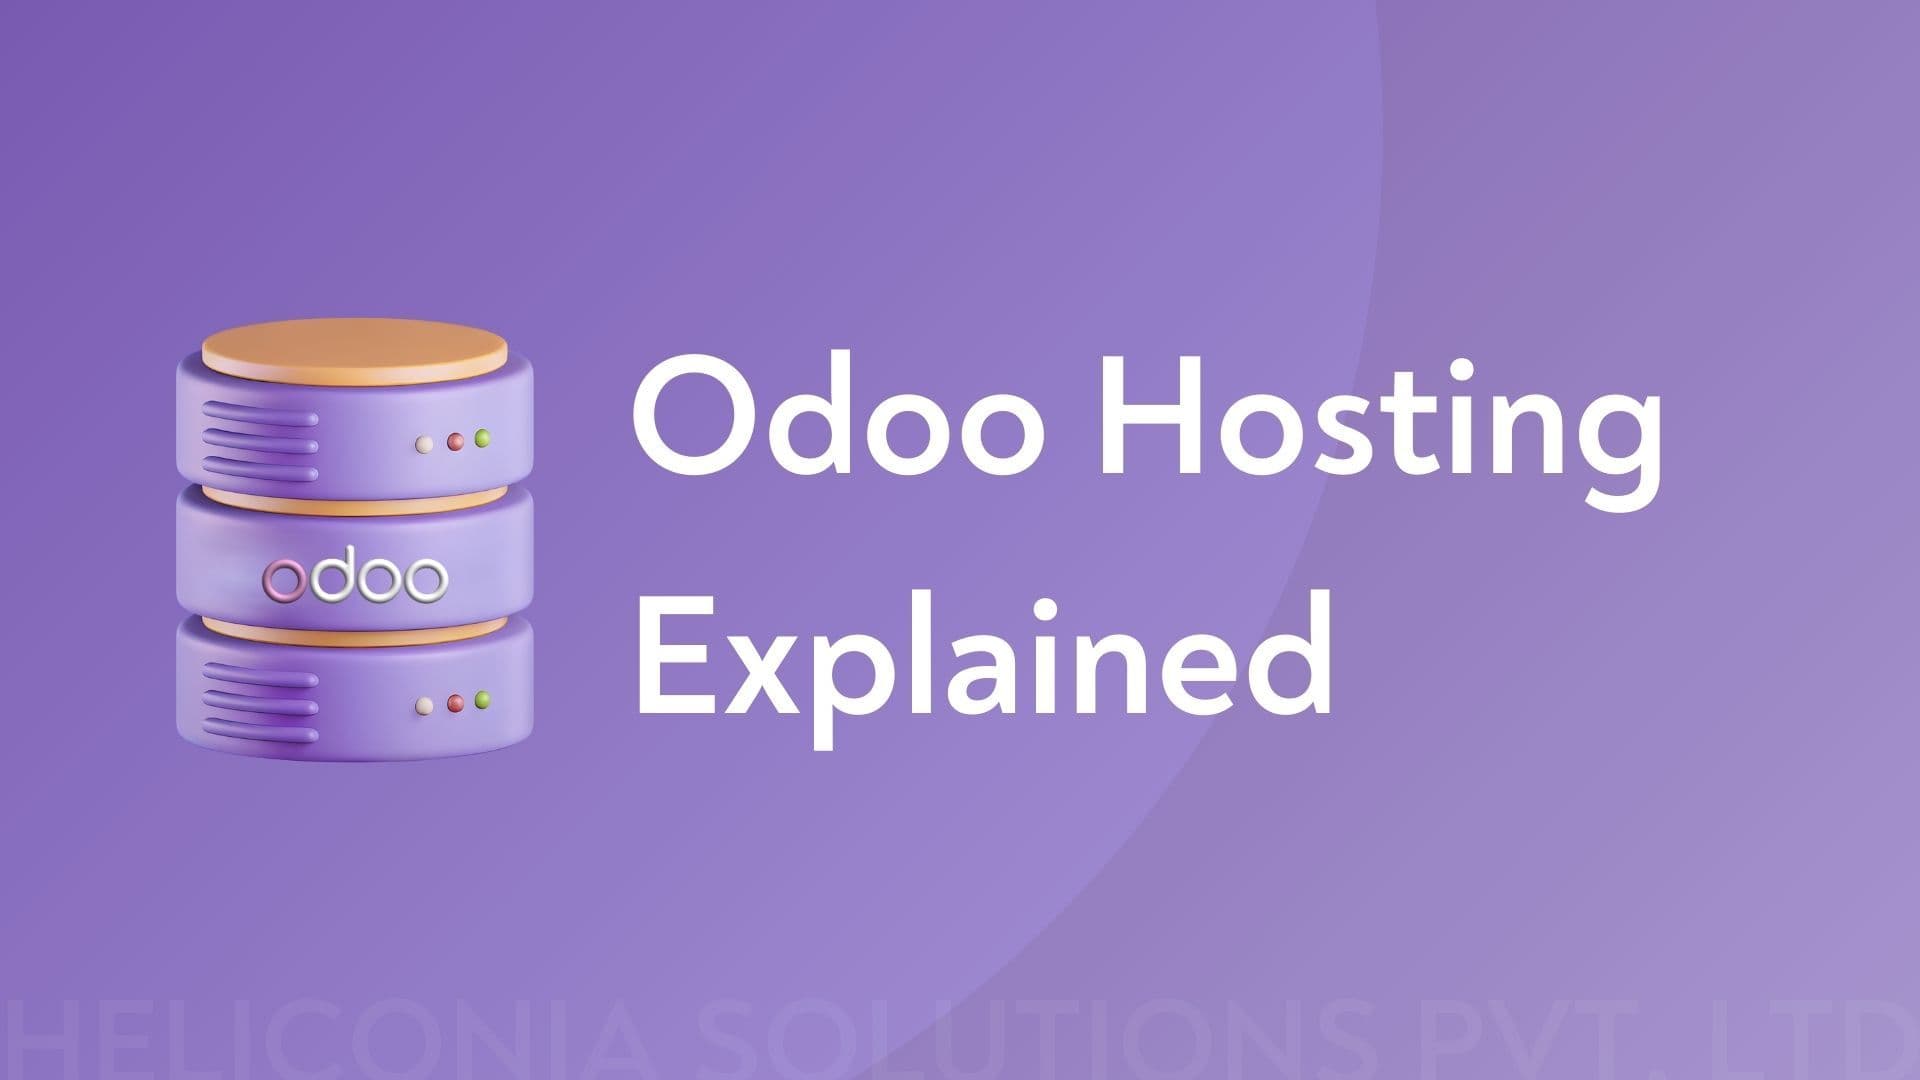 odoo hosting explained